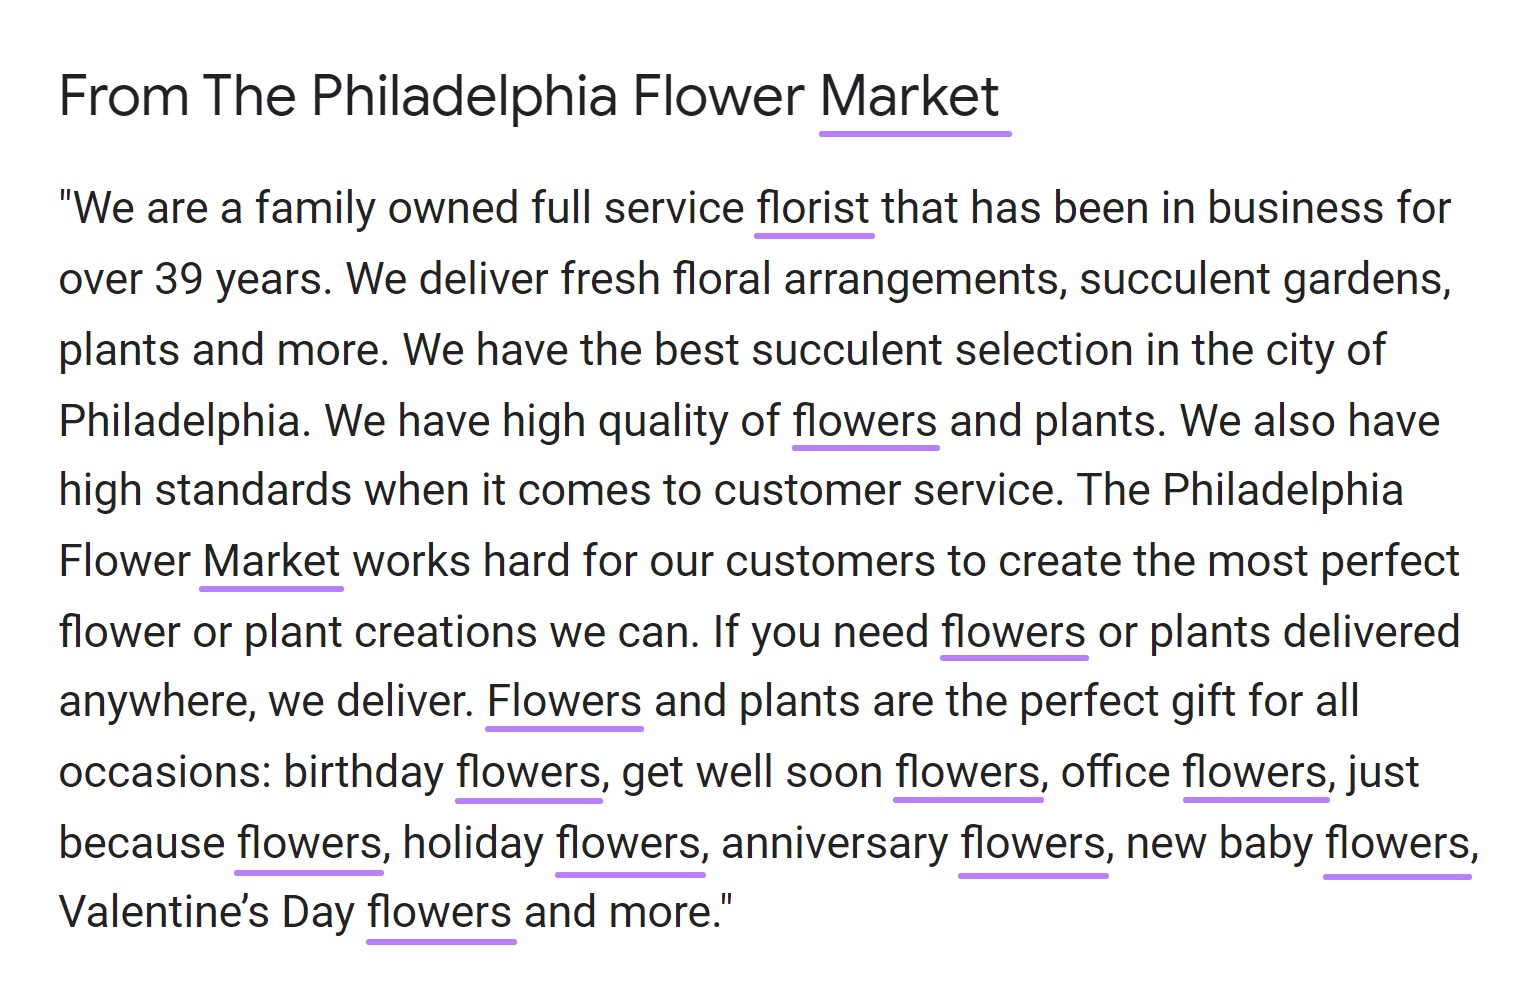 “florist,” “flowers,” and “market" keywords highlighted in The Philadelphia Flower Market description